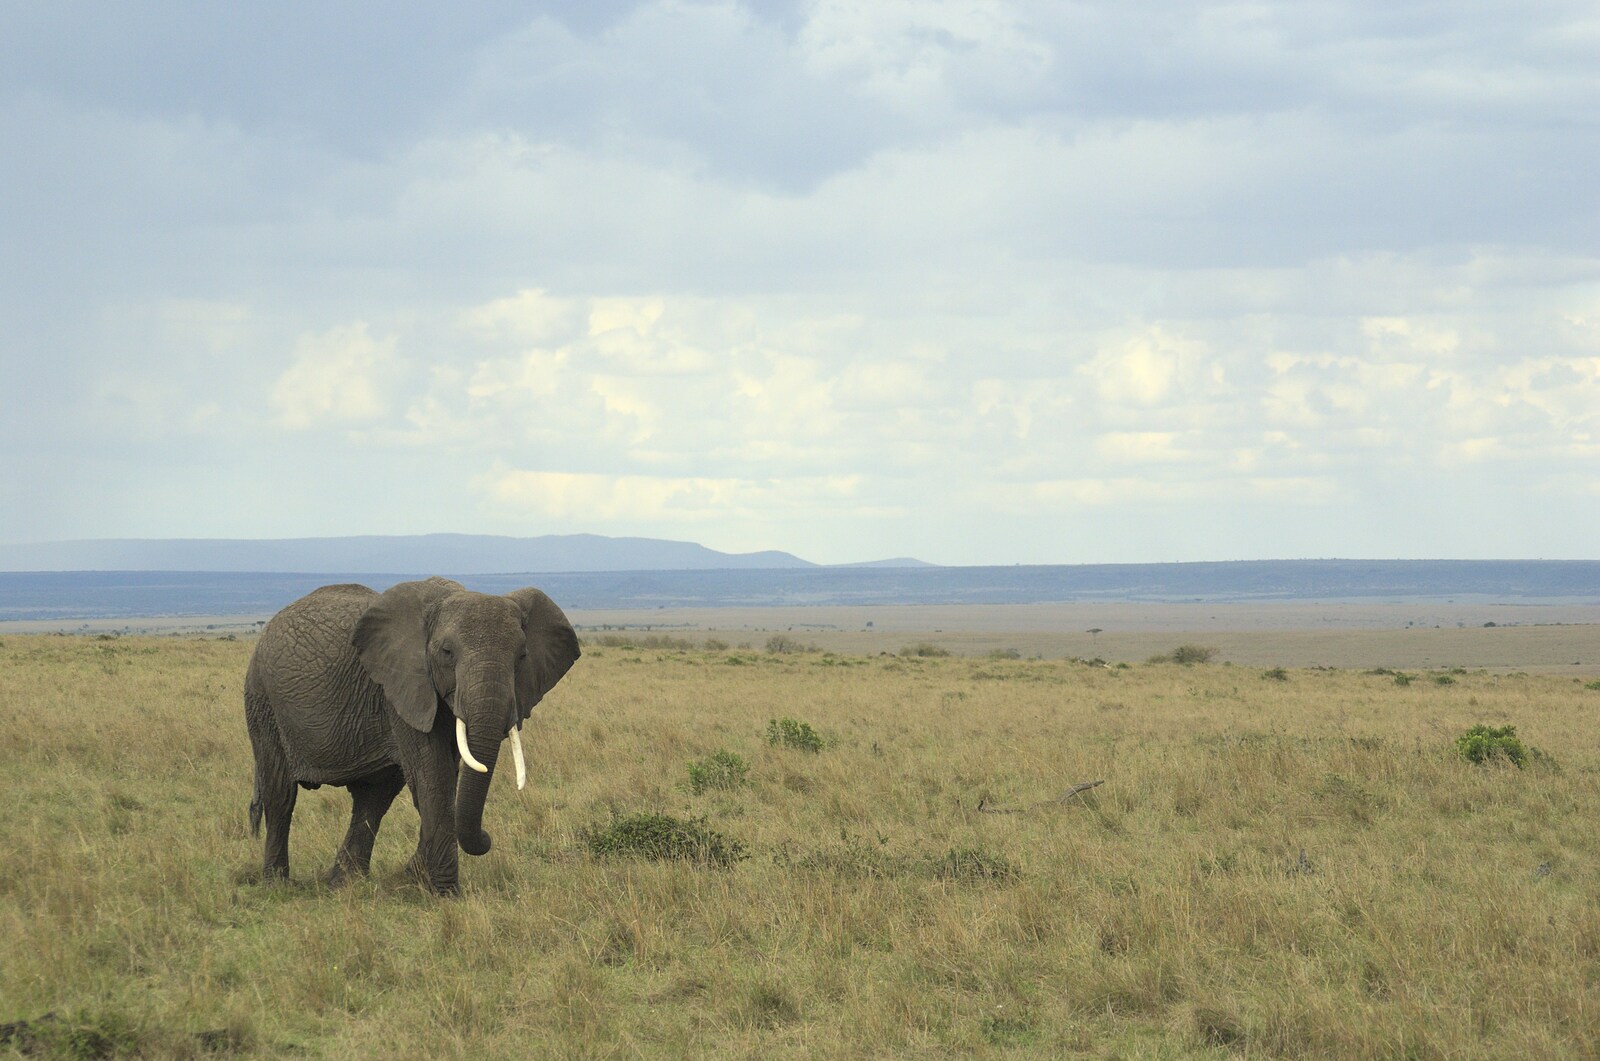 A lone elephant on the plains from Maasai Mara Safari and a Maasai Village, Ololaimutia, Kenya - 5th November 2010